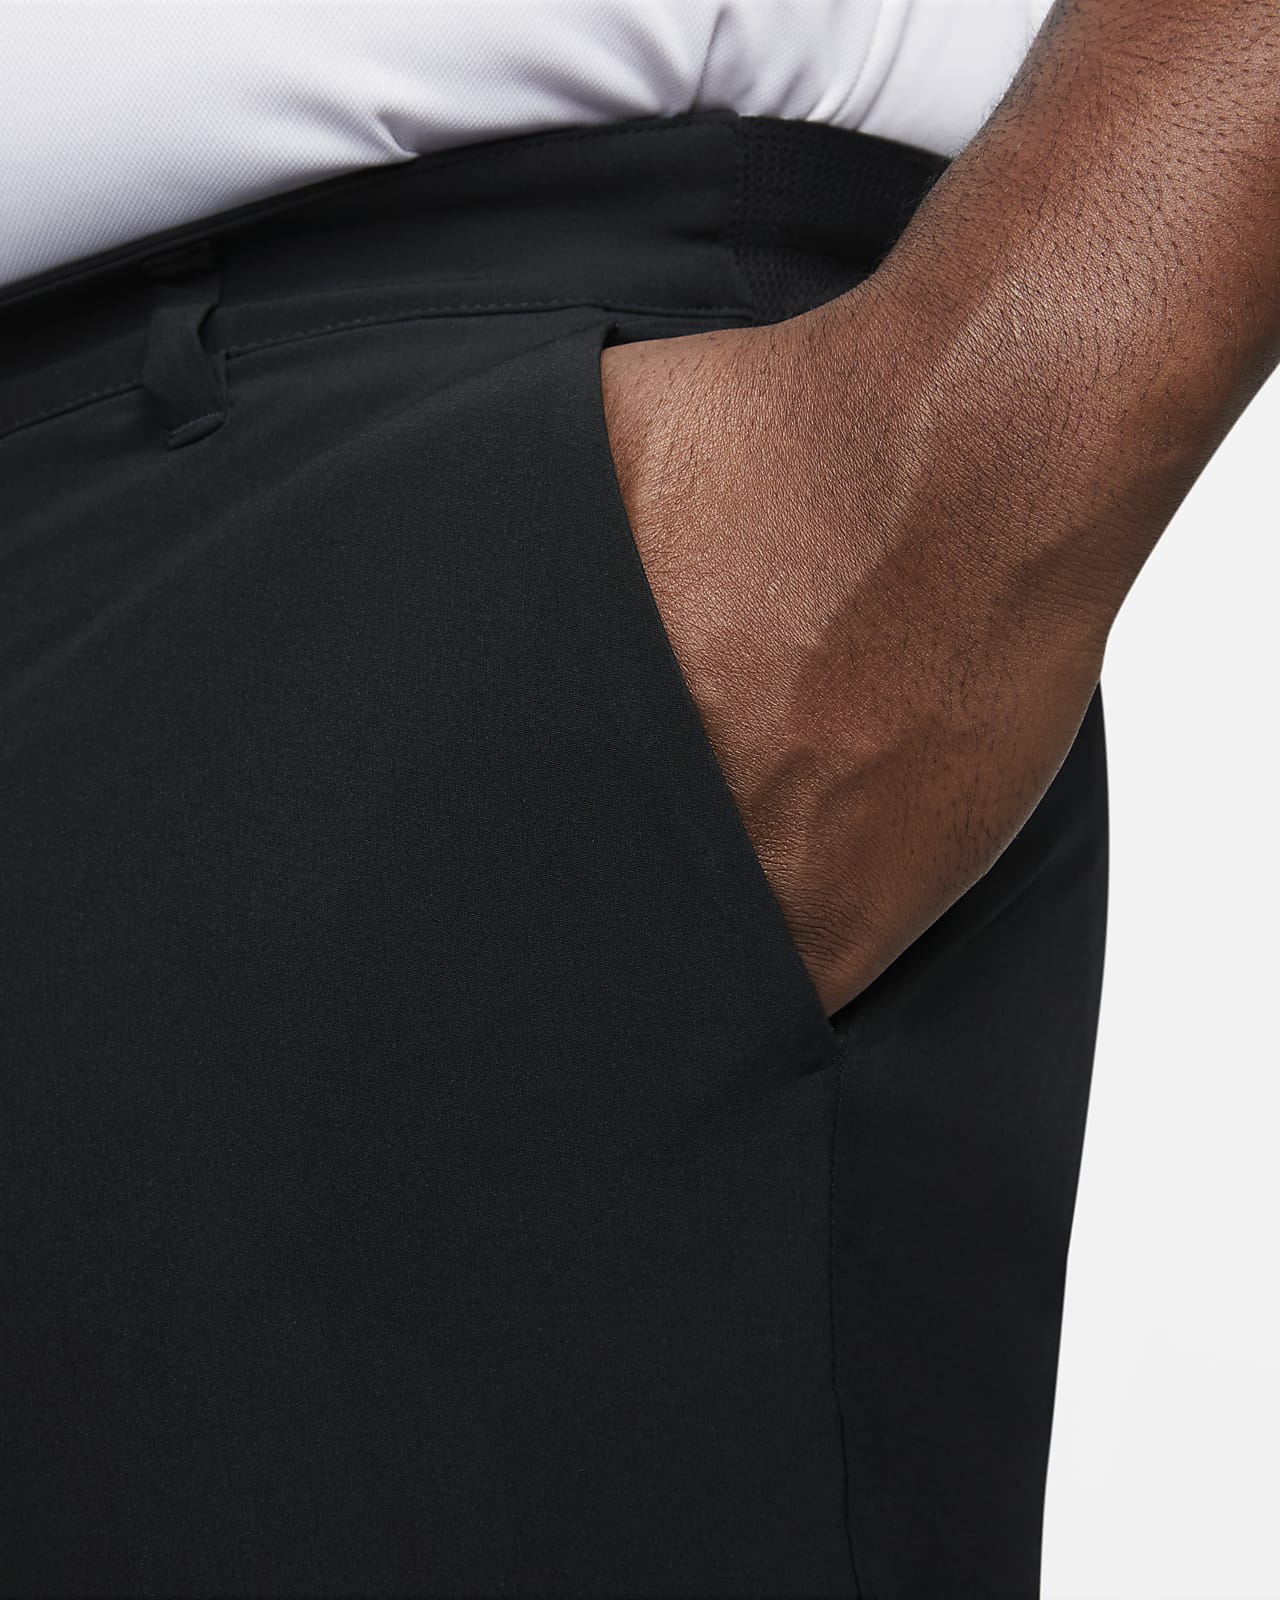 Nike Dri-FIT Vapor Men's Slim-Fit Golf Trousers